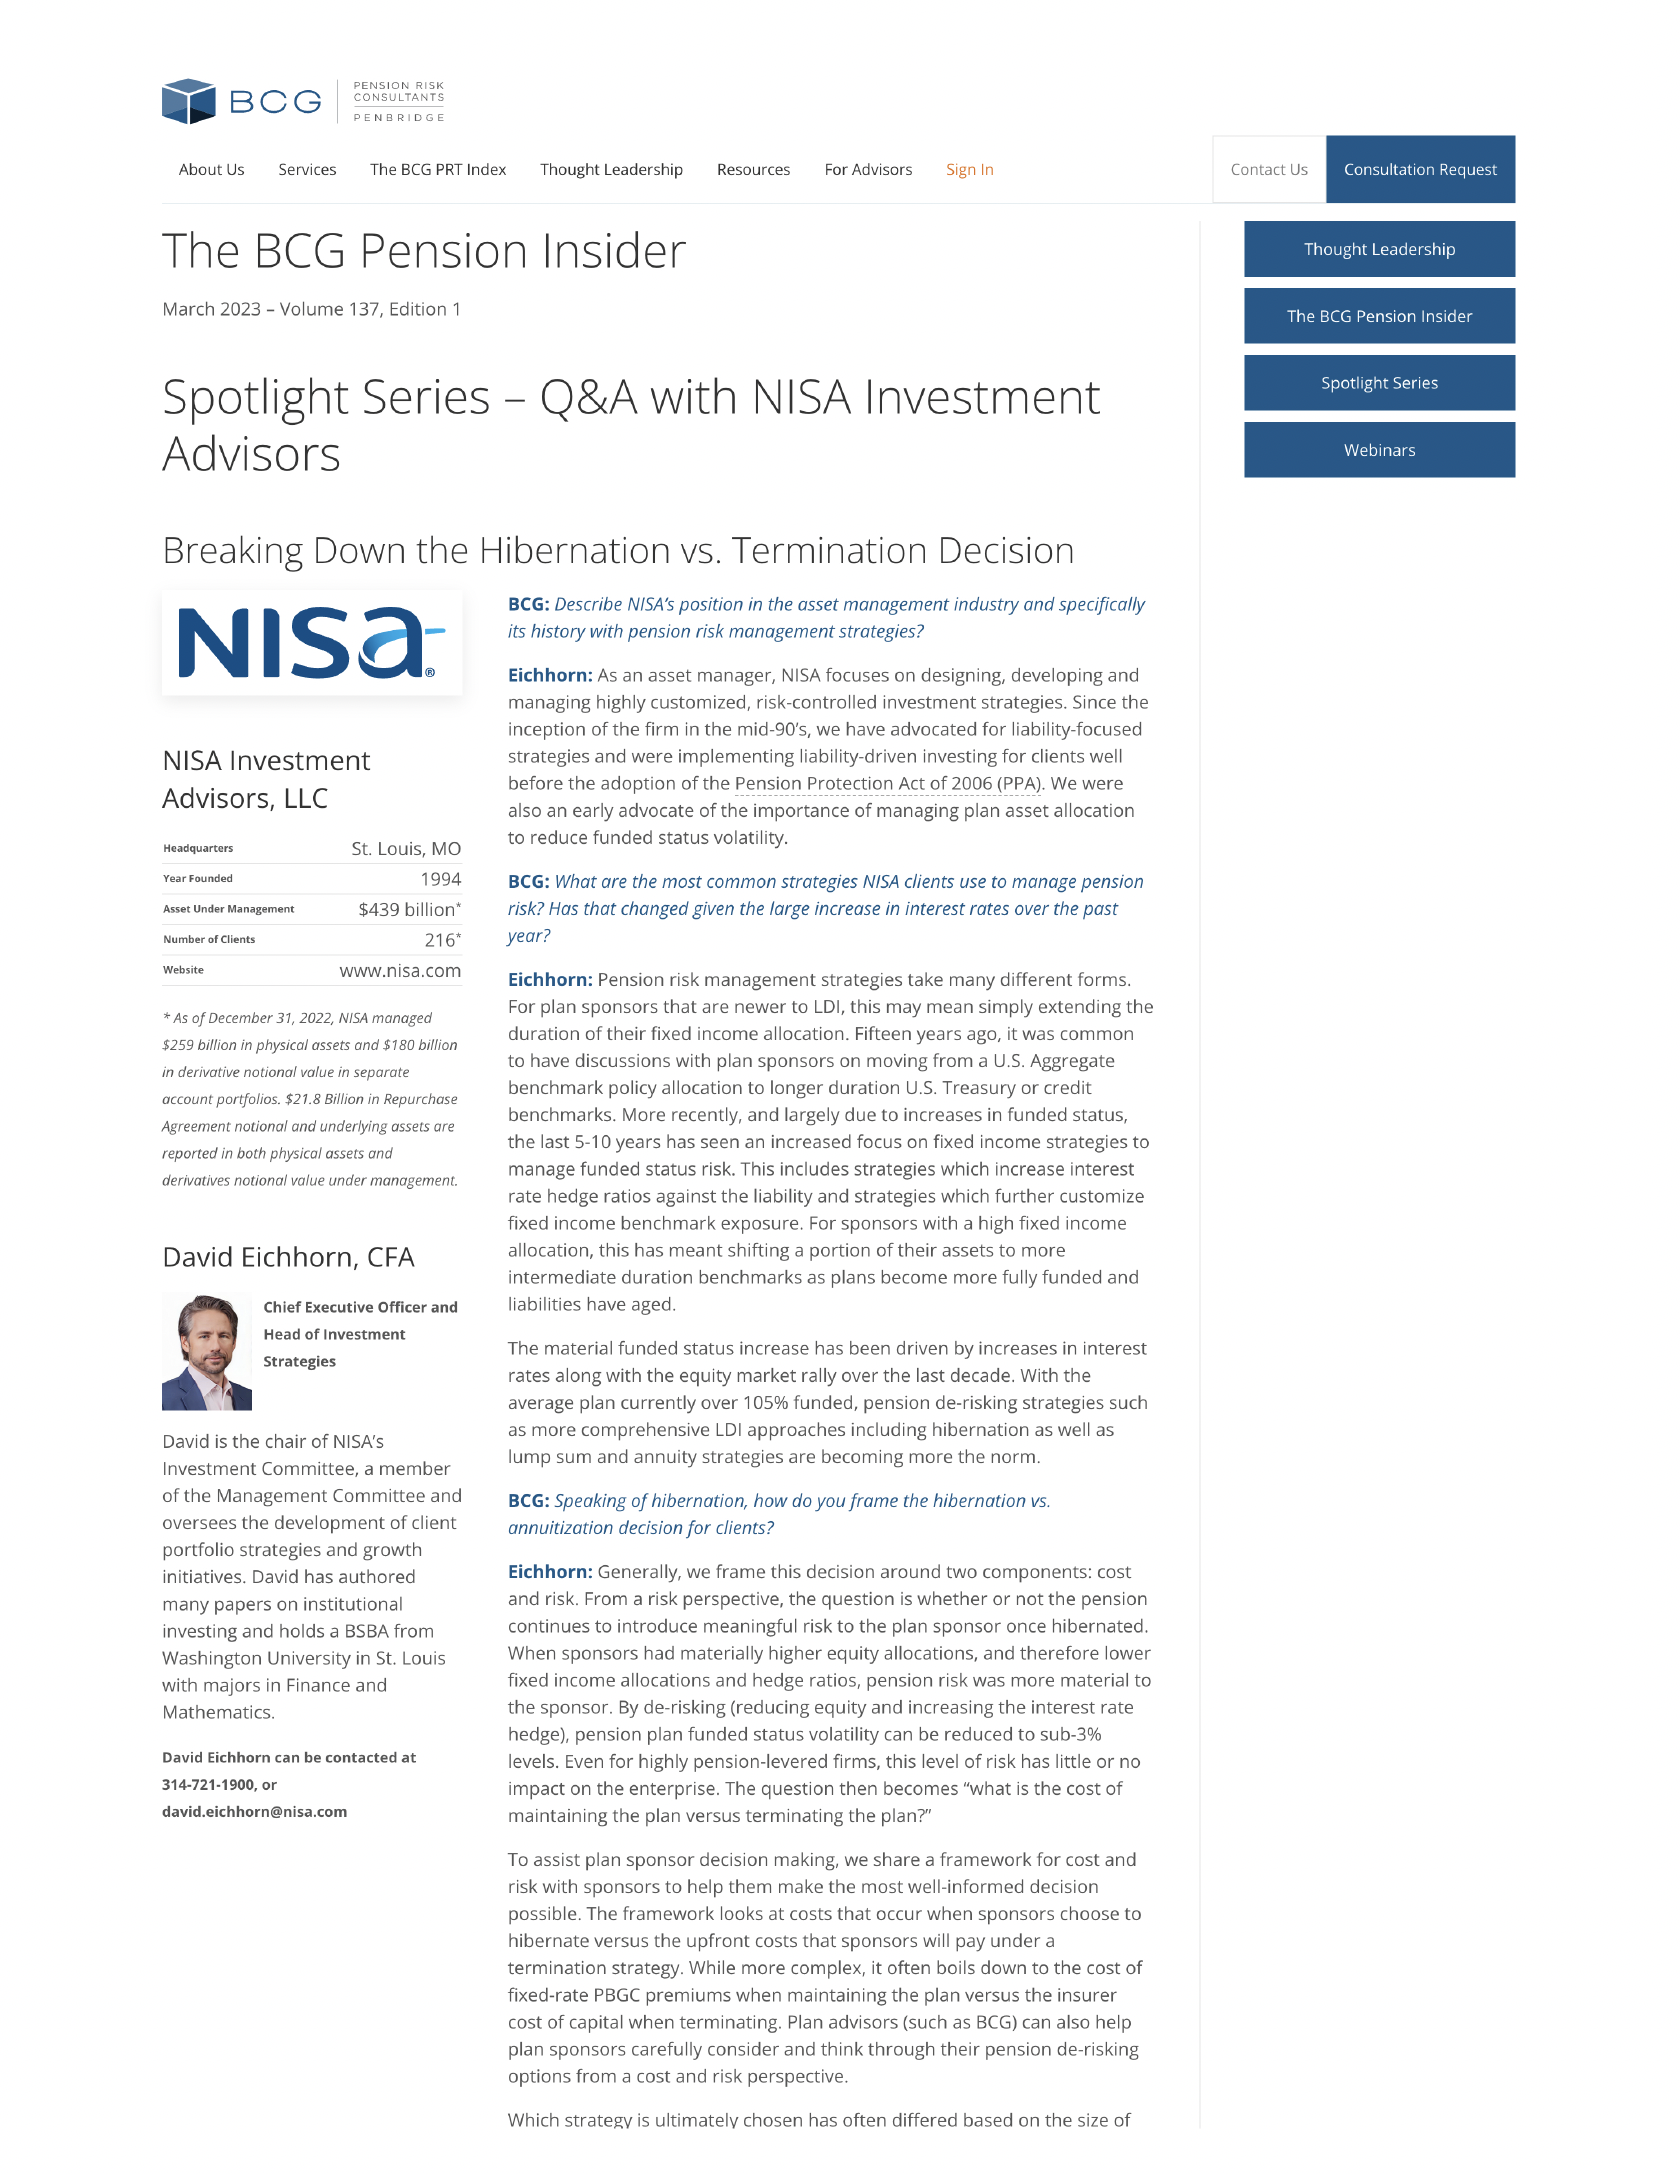 Spotlight Series – QA with NISA Investment Advisors